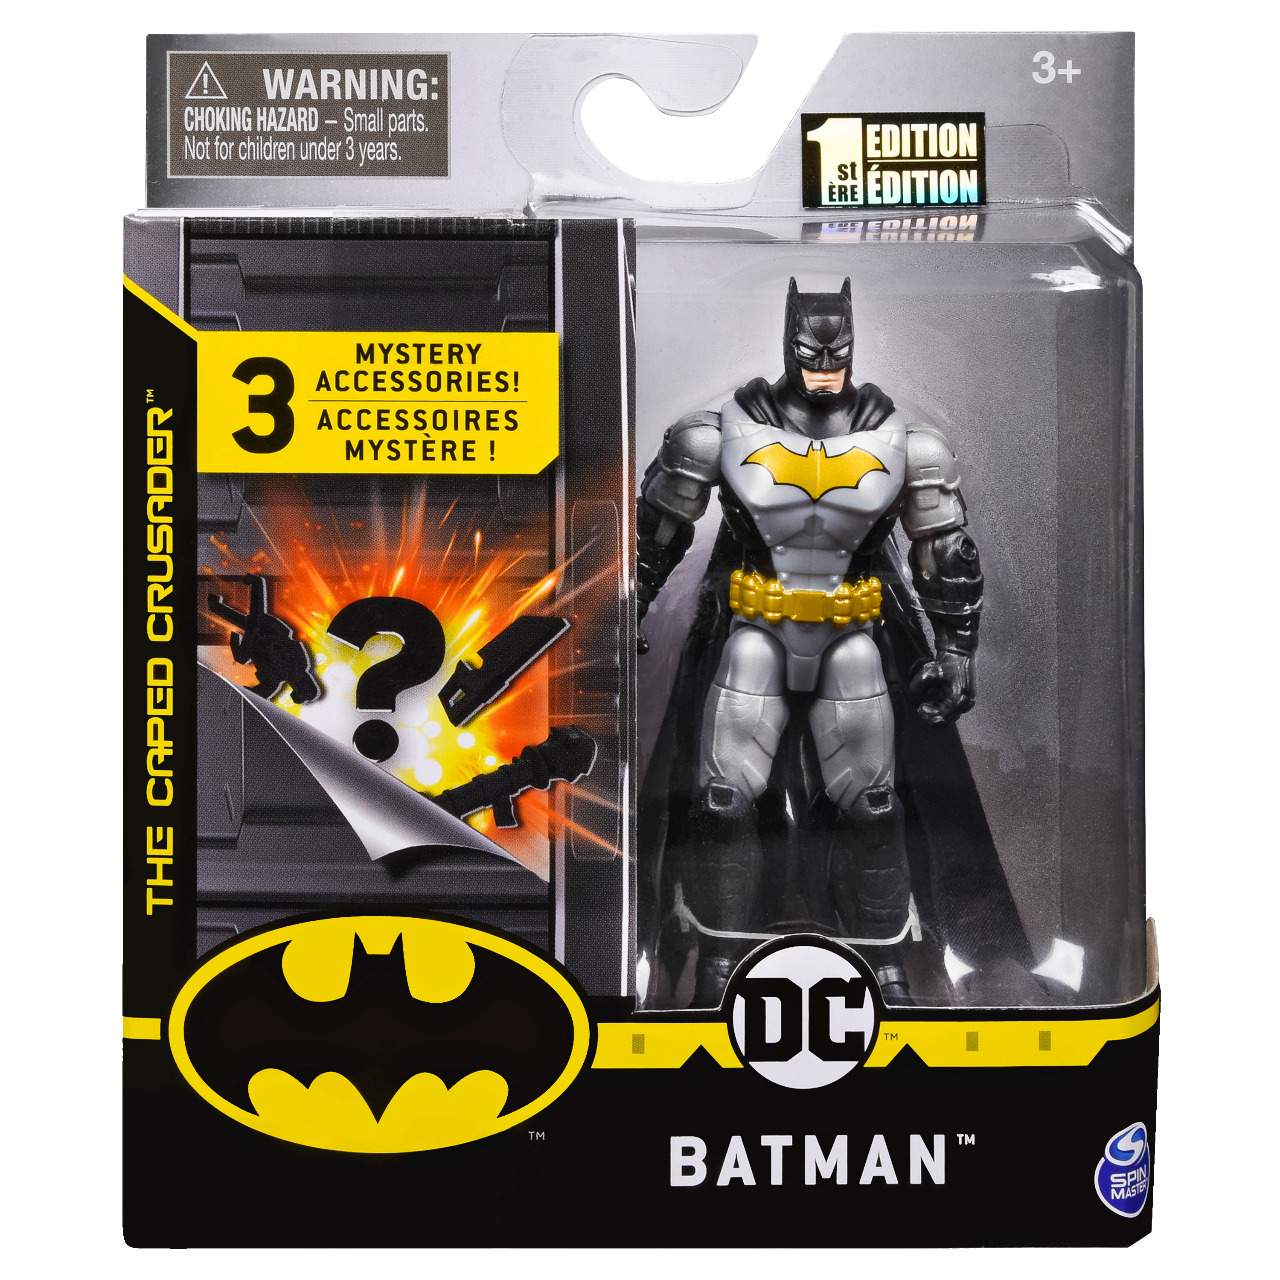 Línea de juguetes de Batman el regalo ideal para sorprender en esta Navidad